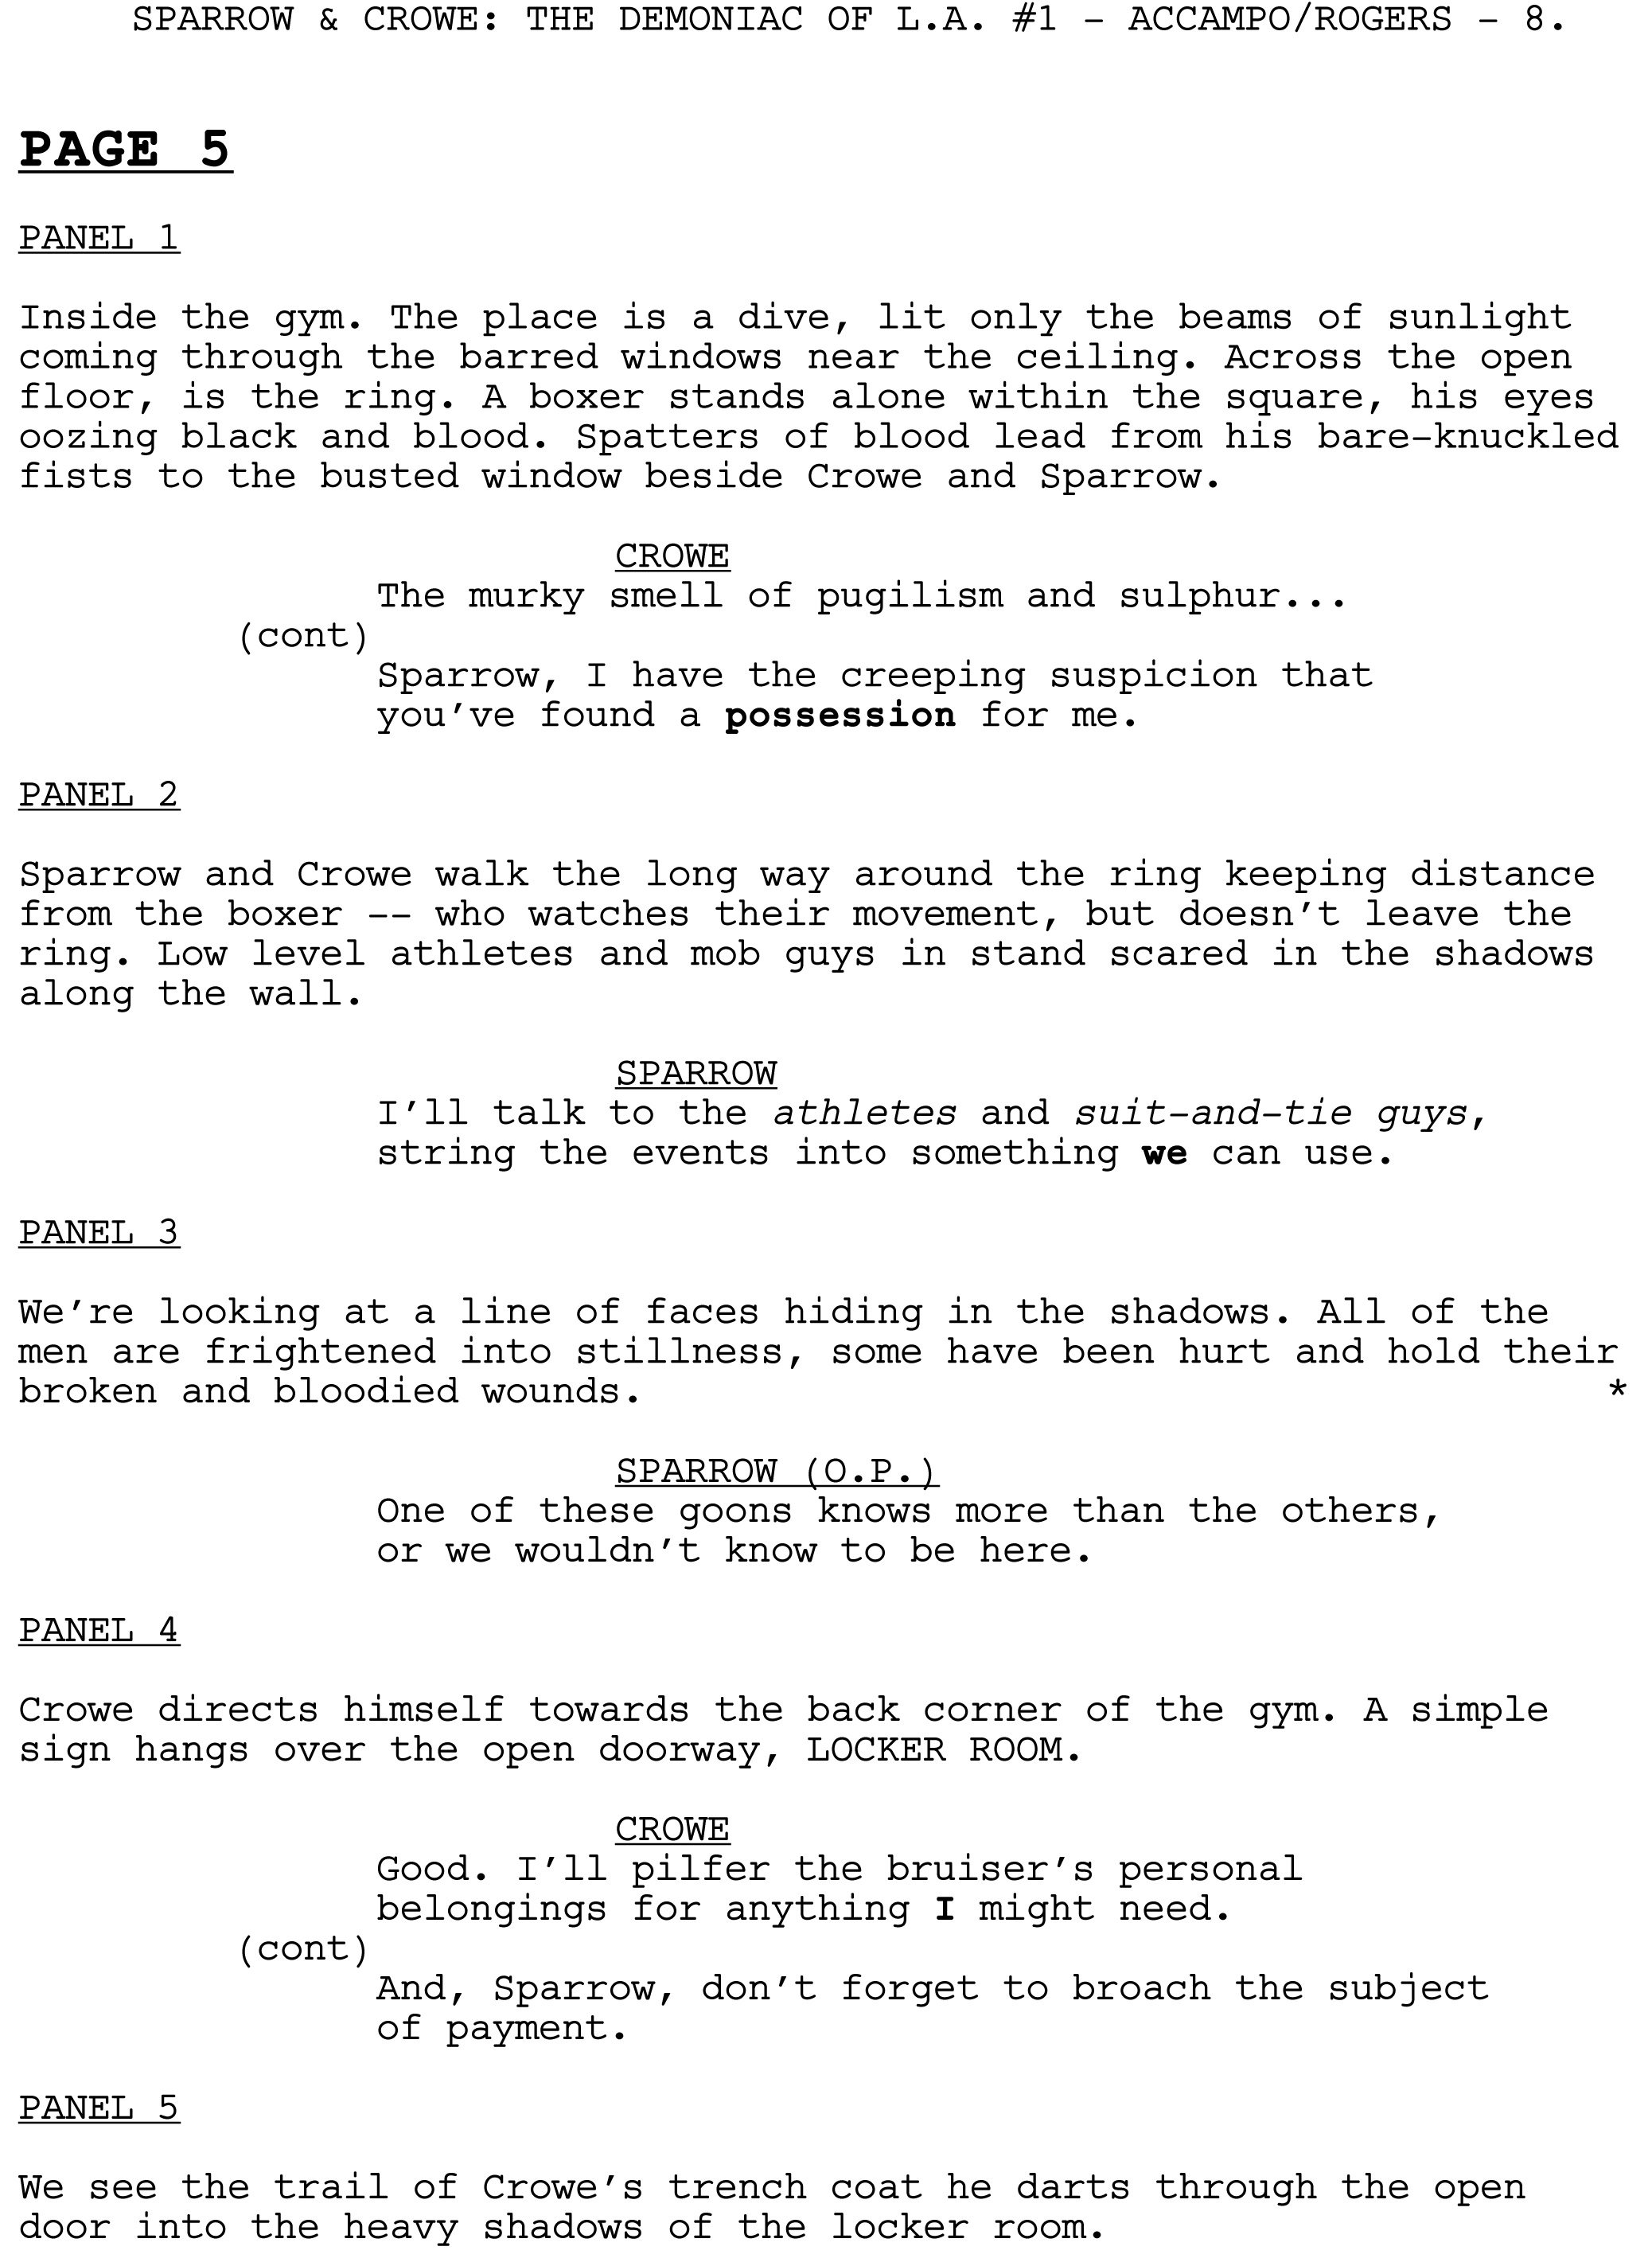 Sparrow & Crowe Script Pg. 5